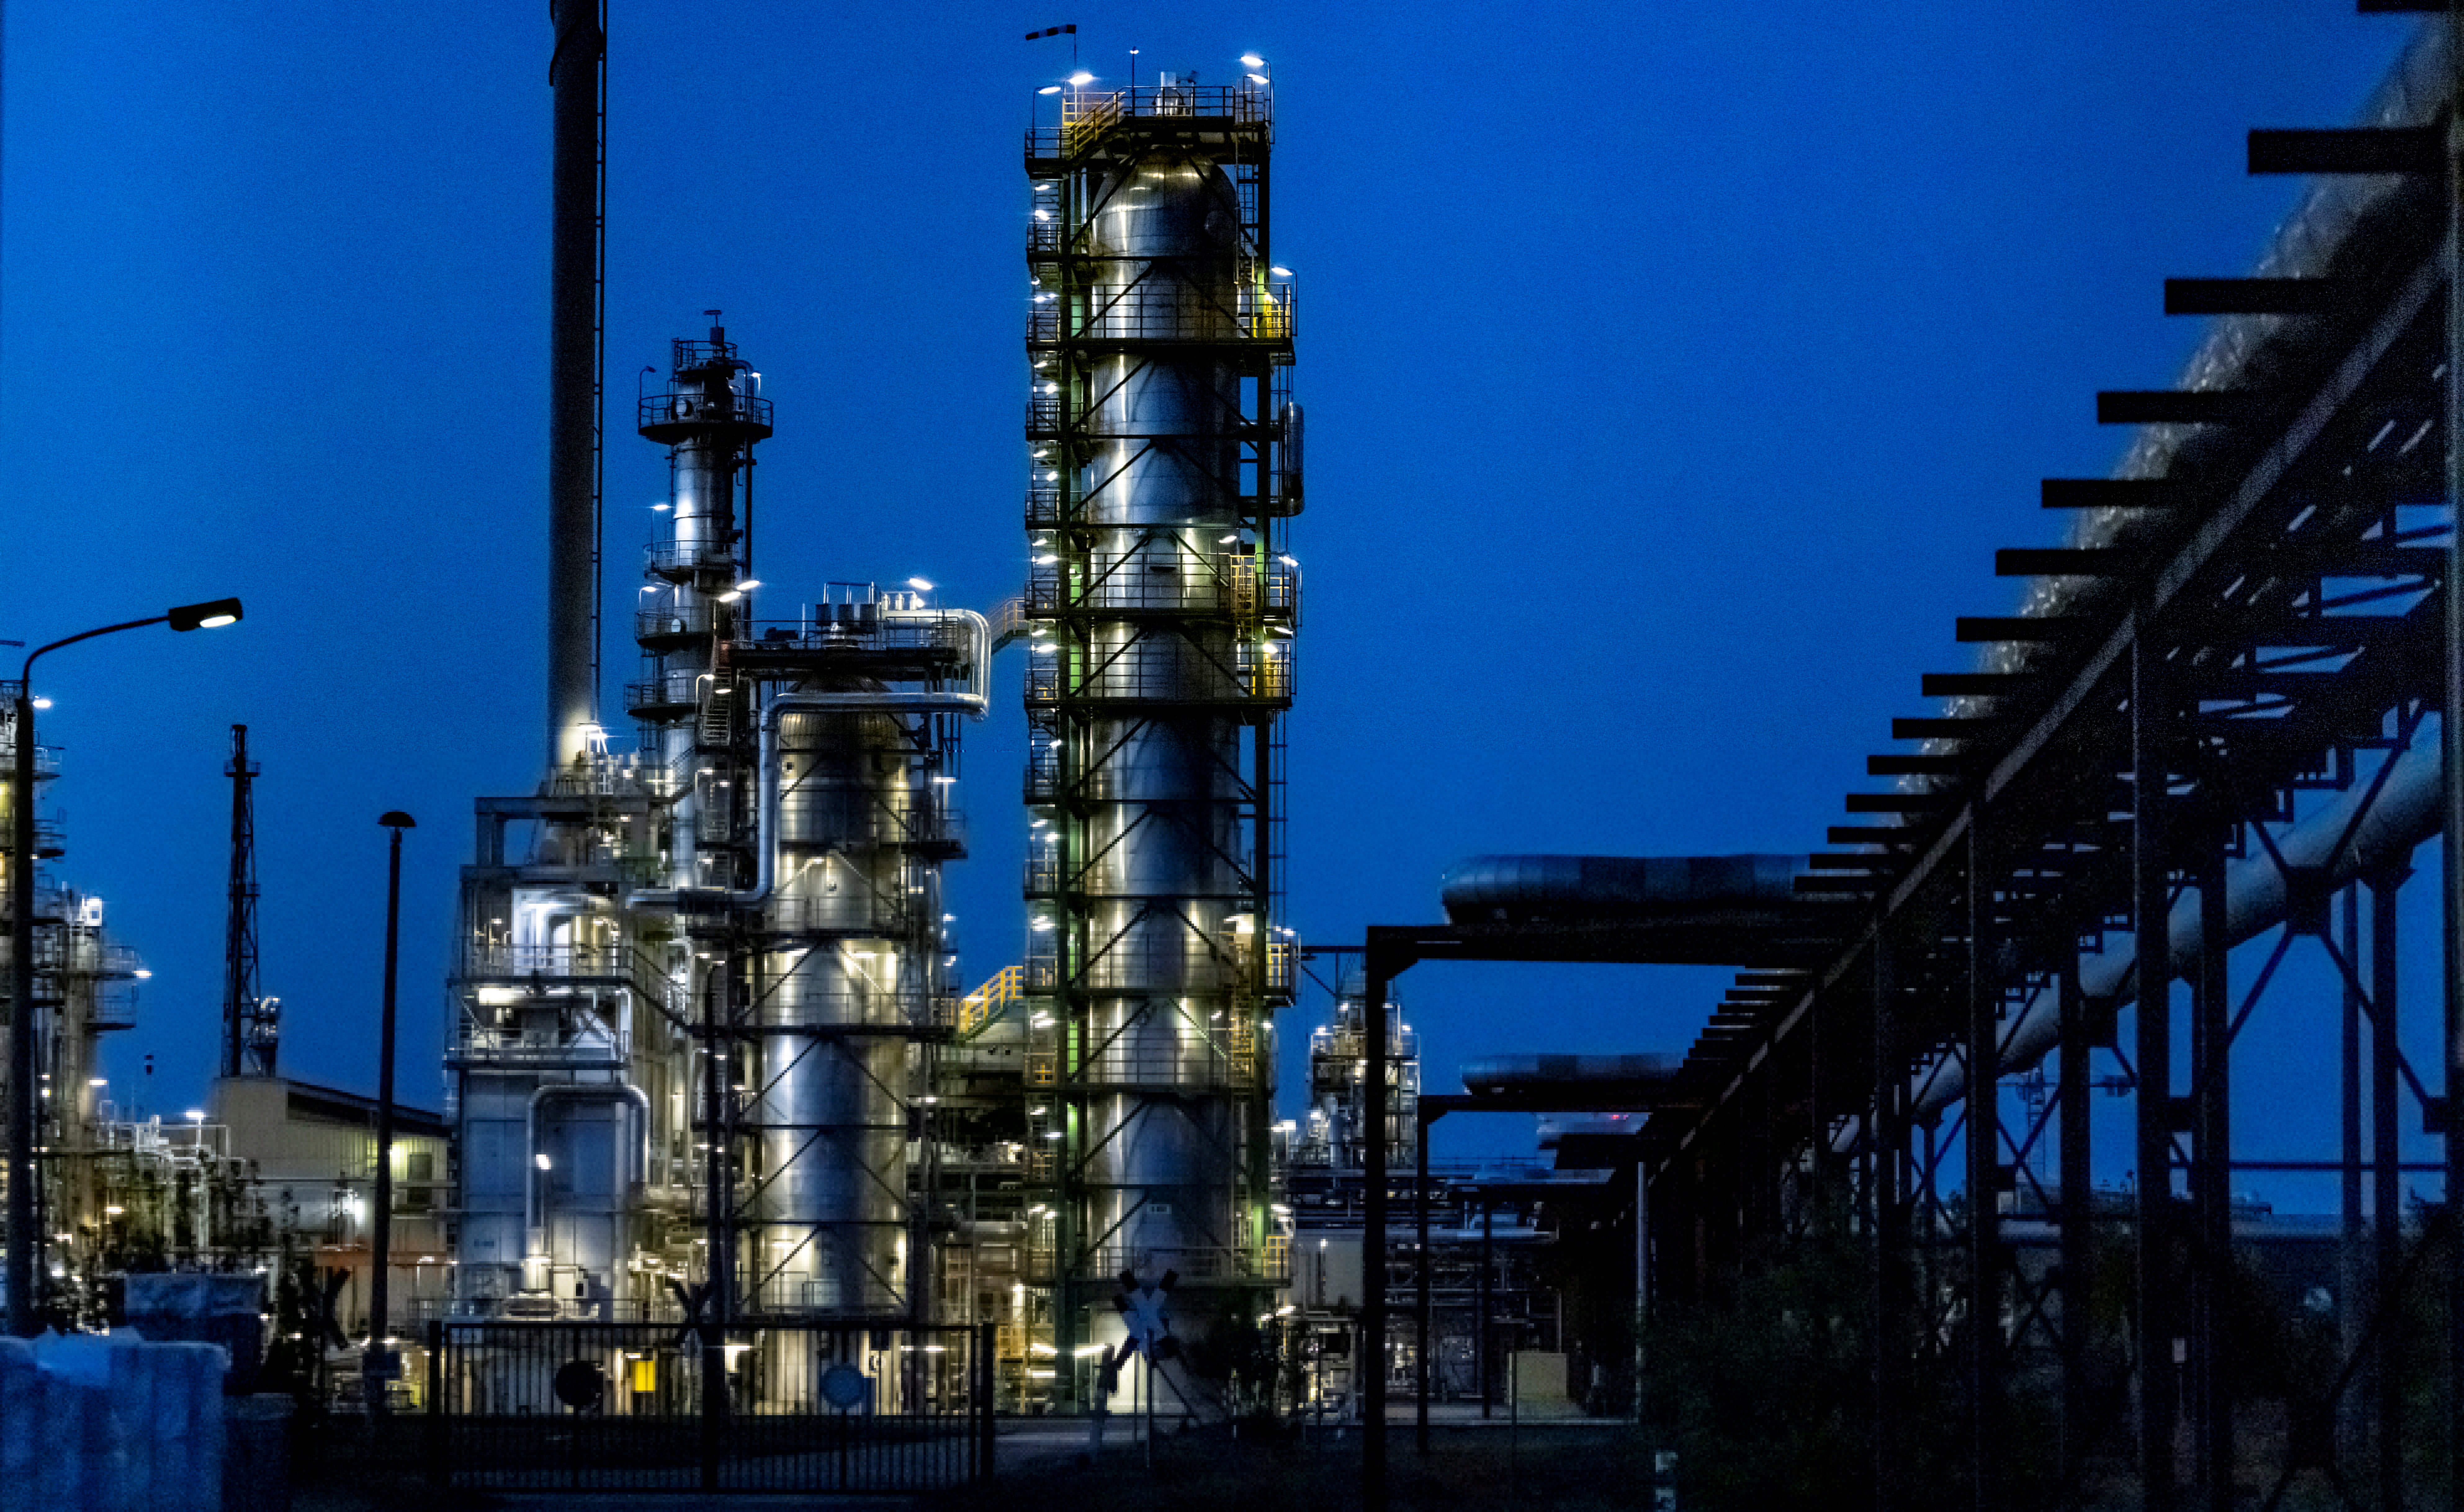 The PCK oil refinery in Schwedt, Germany